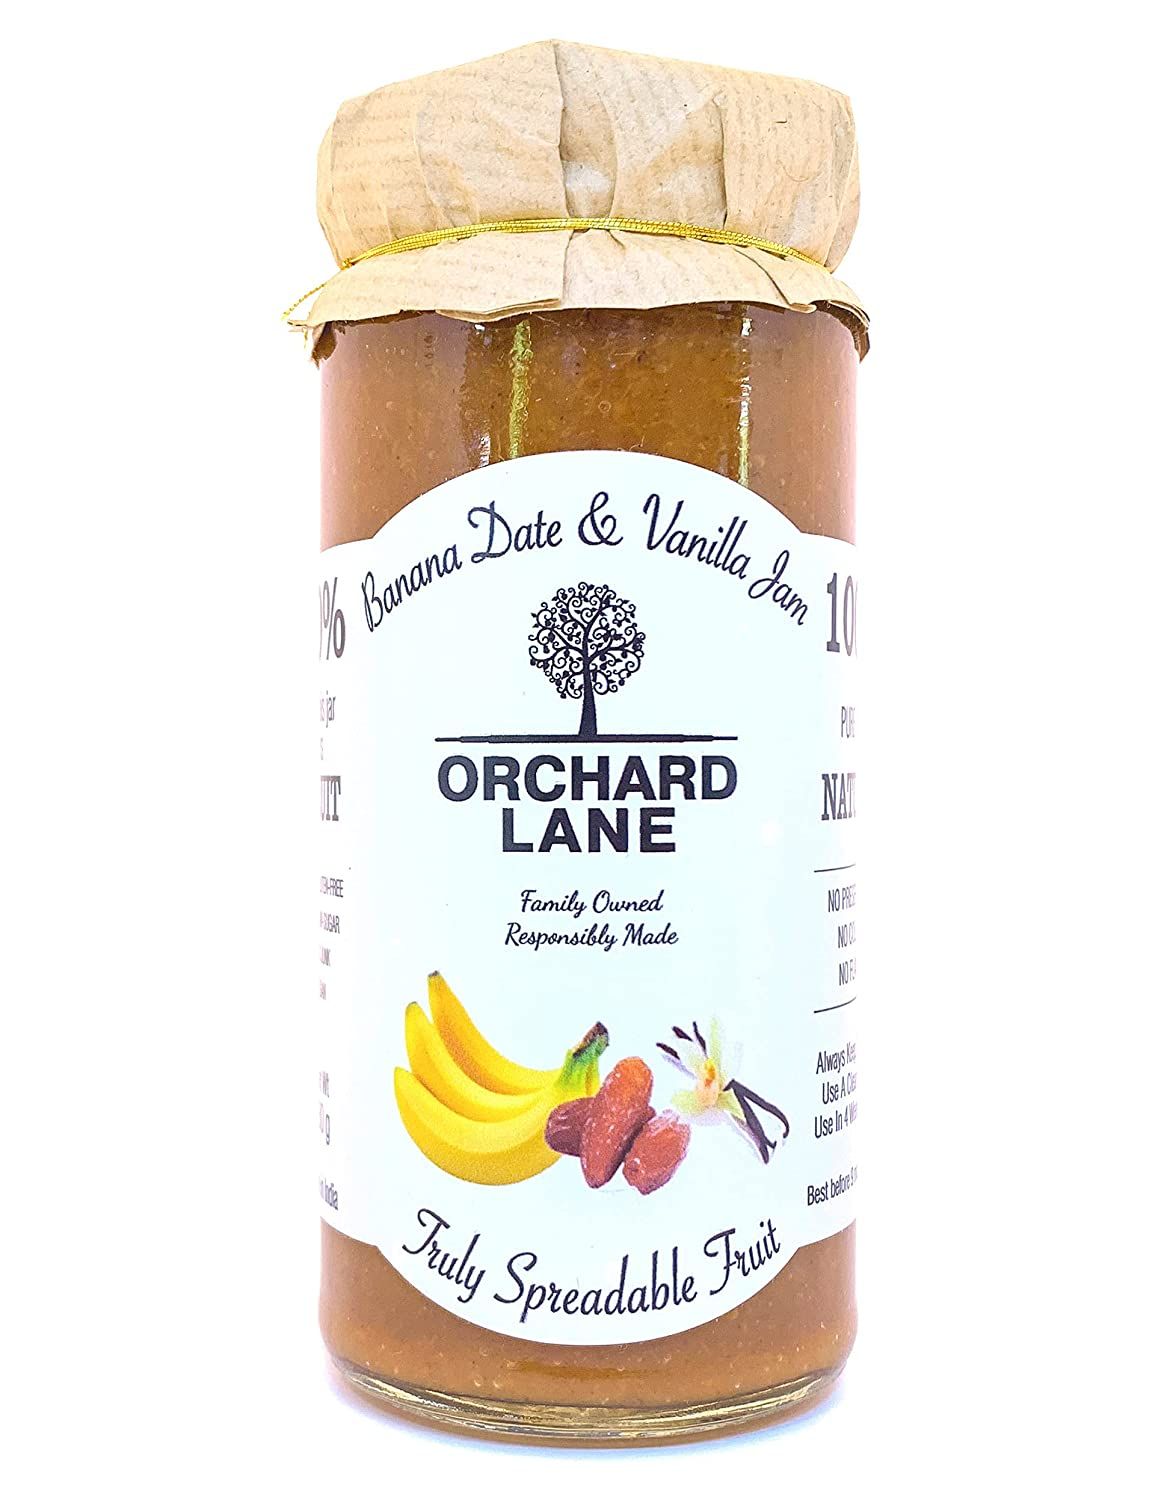 Orchard Lane Banana Date & Vanilla Jam Image